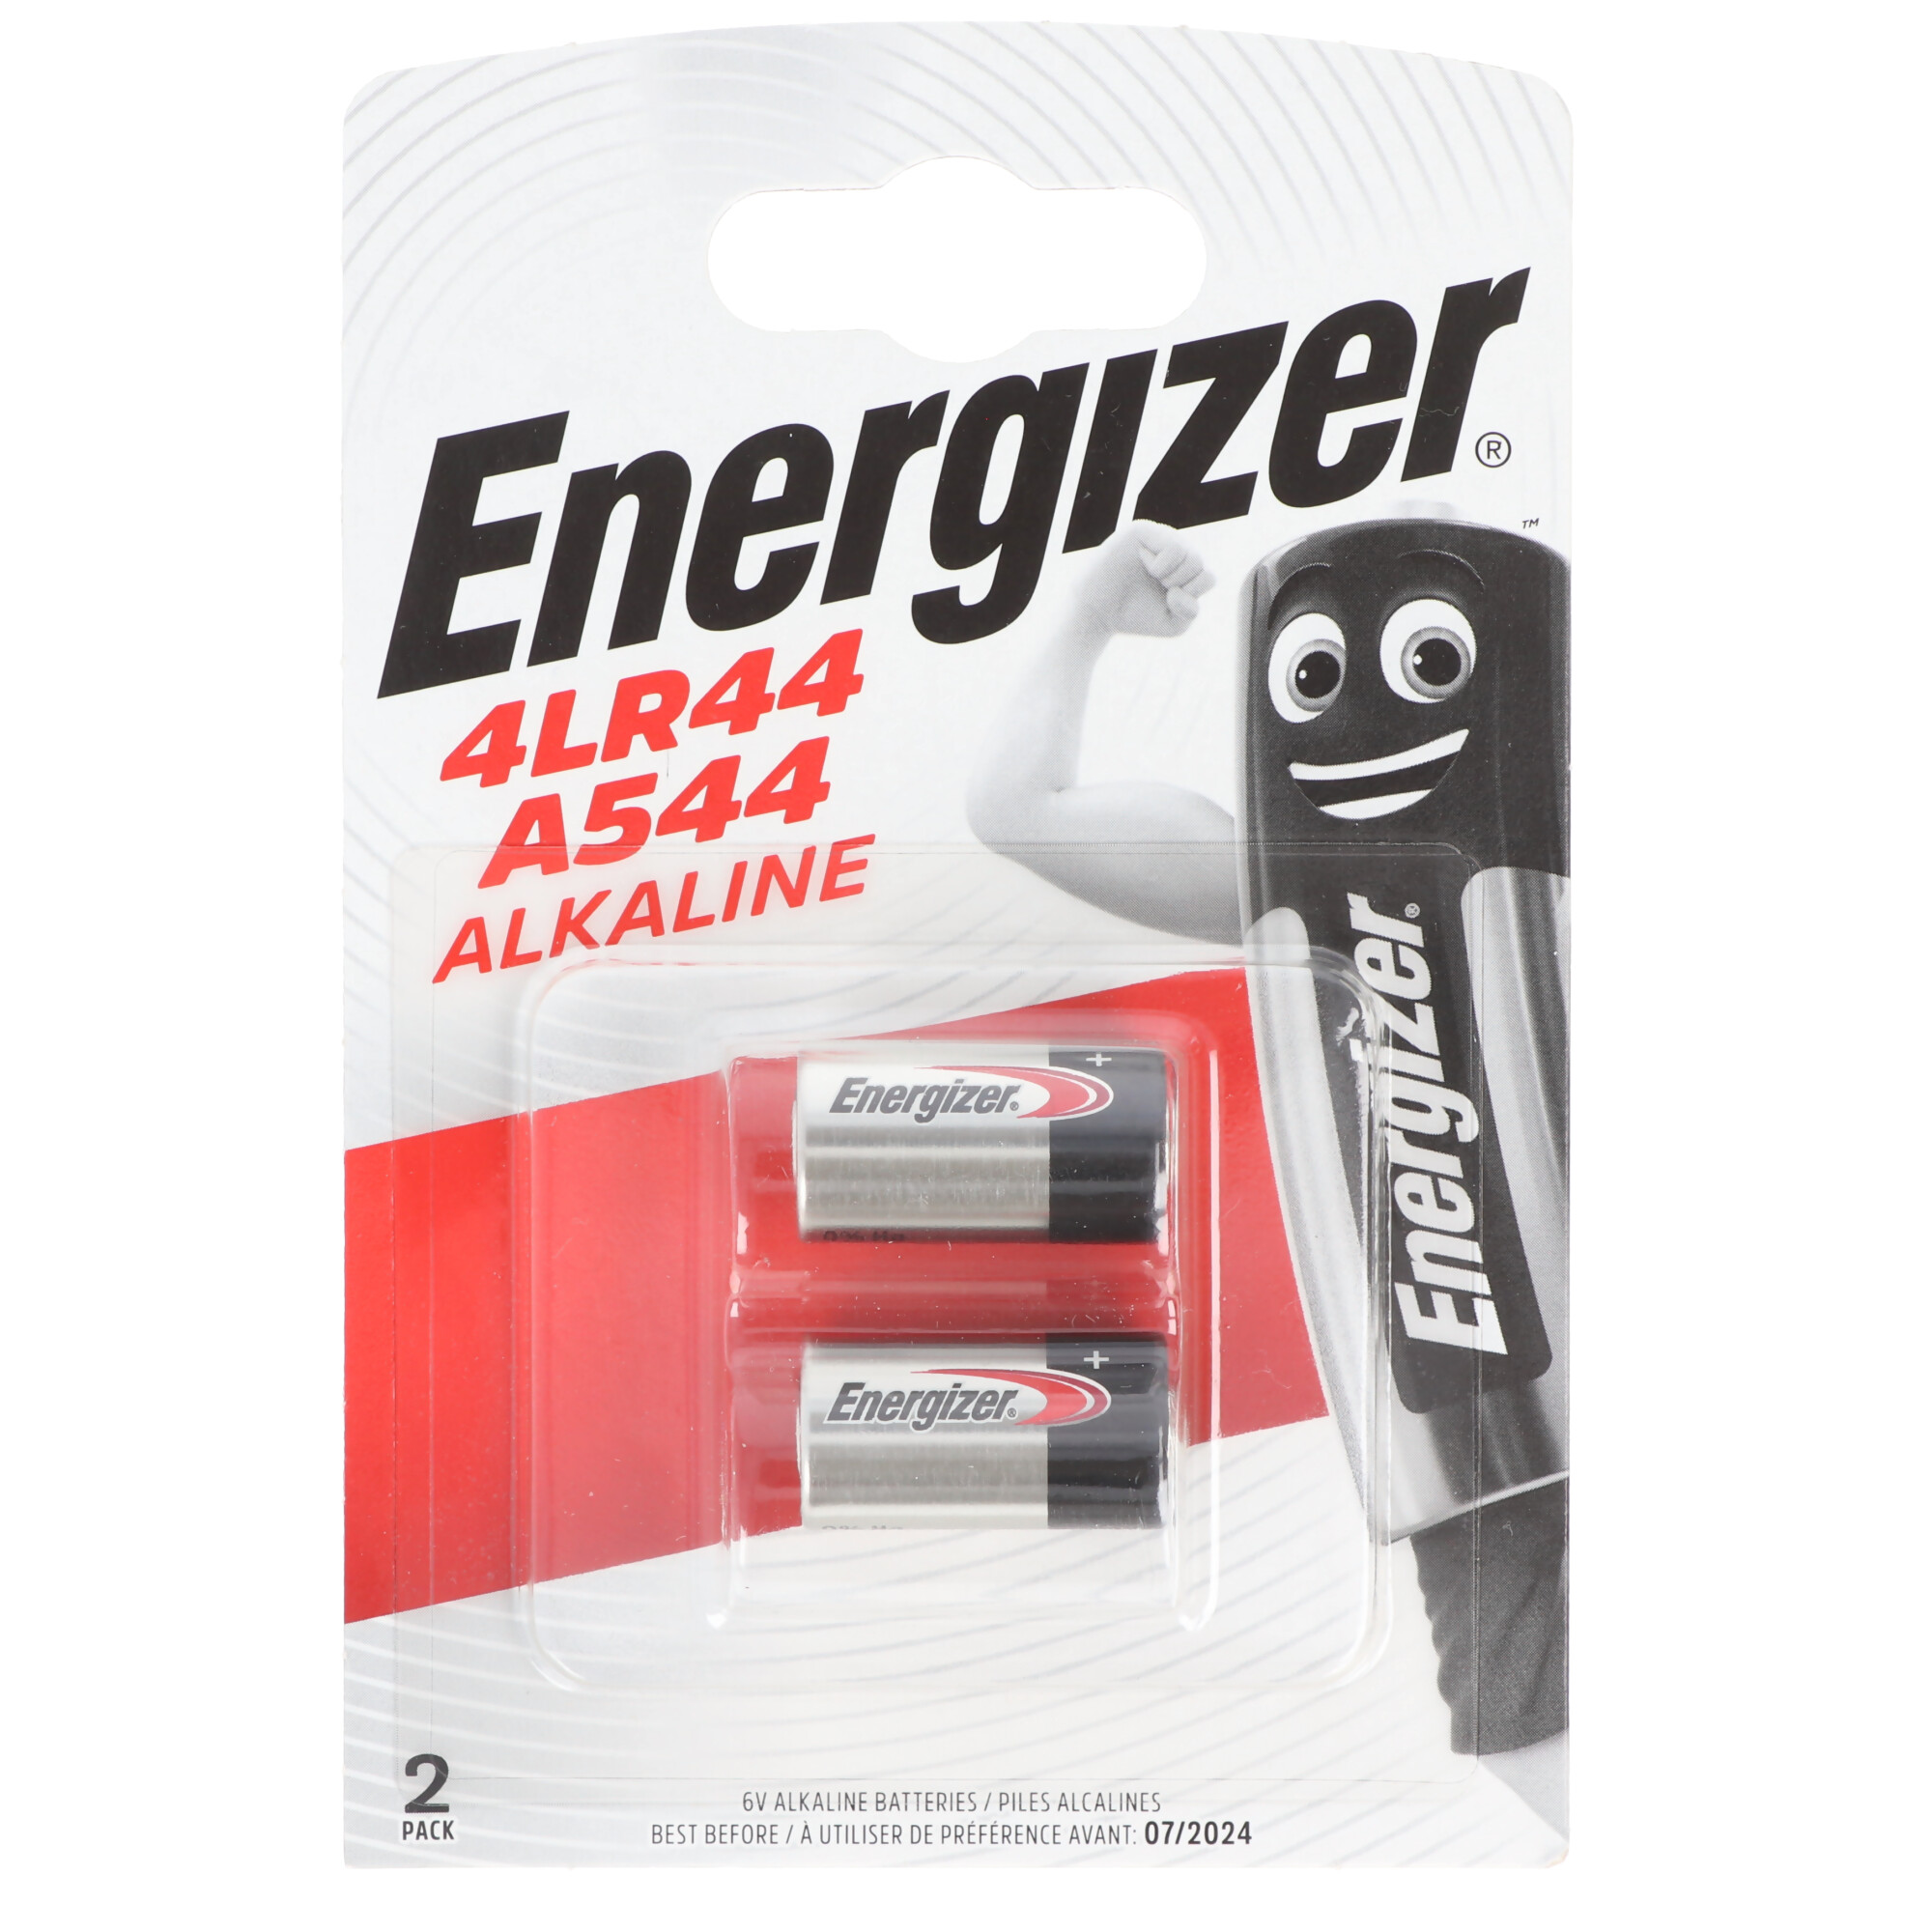 Energizer A544 Alkaline Spezial-Batterie 4LR44 Alkali-Mangan 6V 178mAh 2 Stück